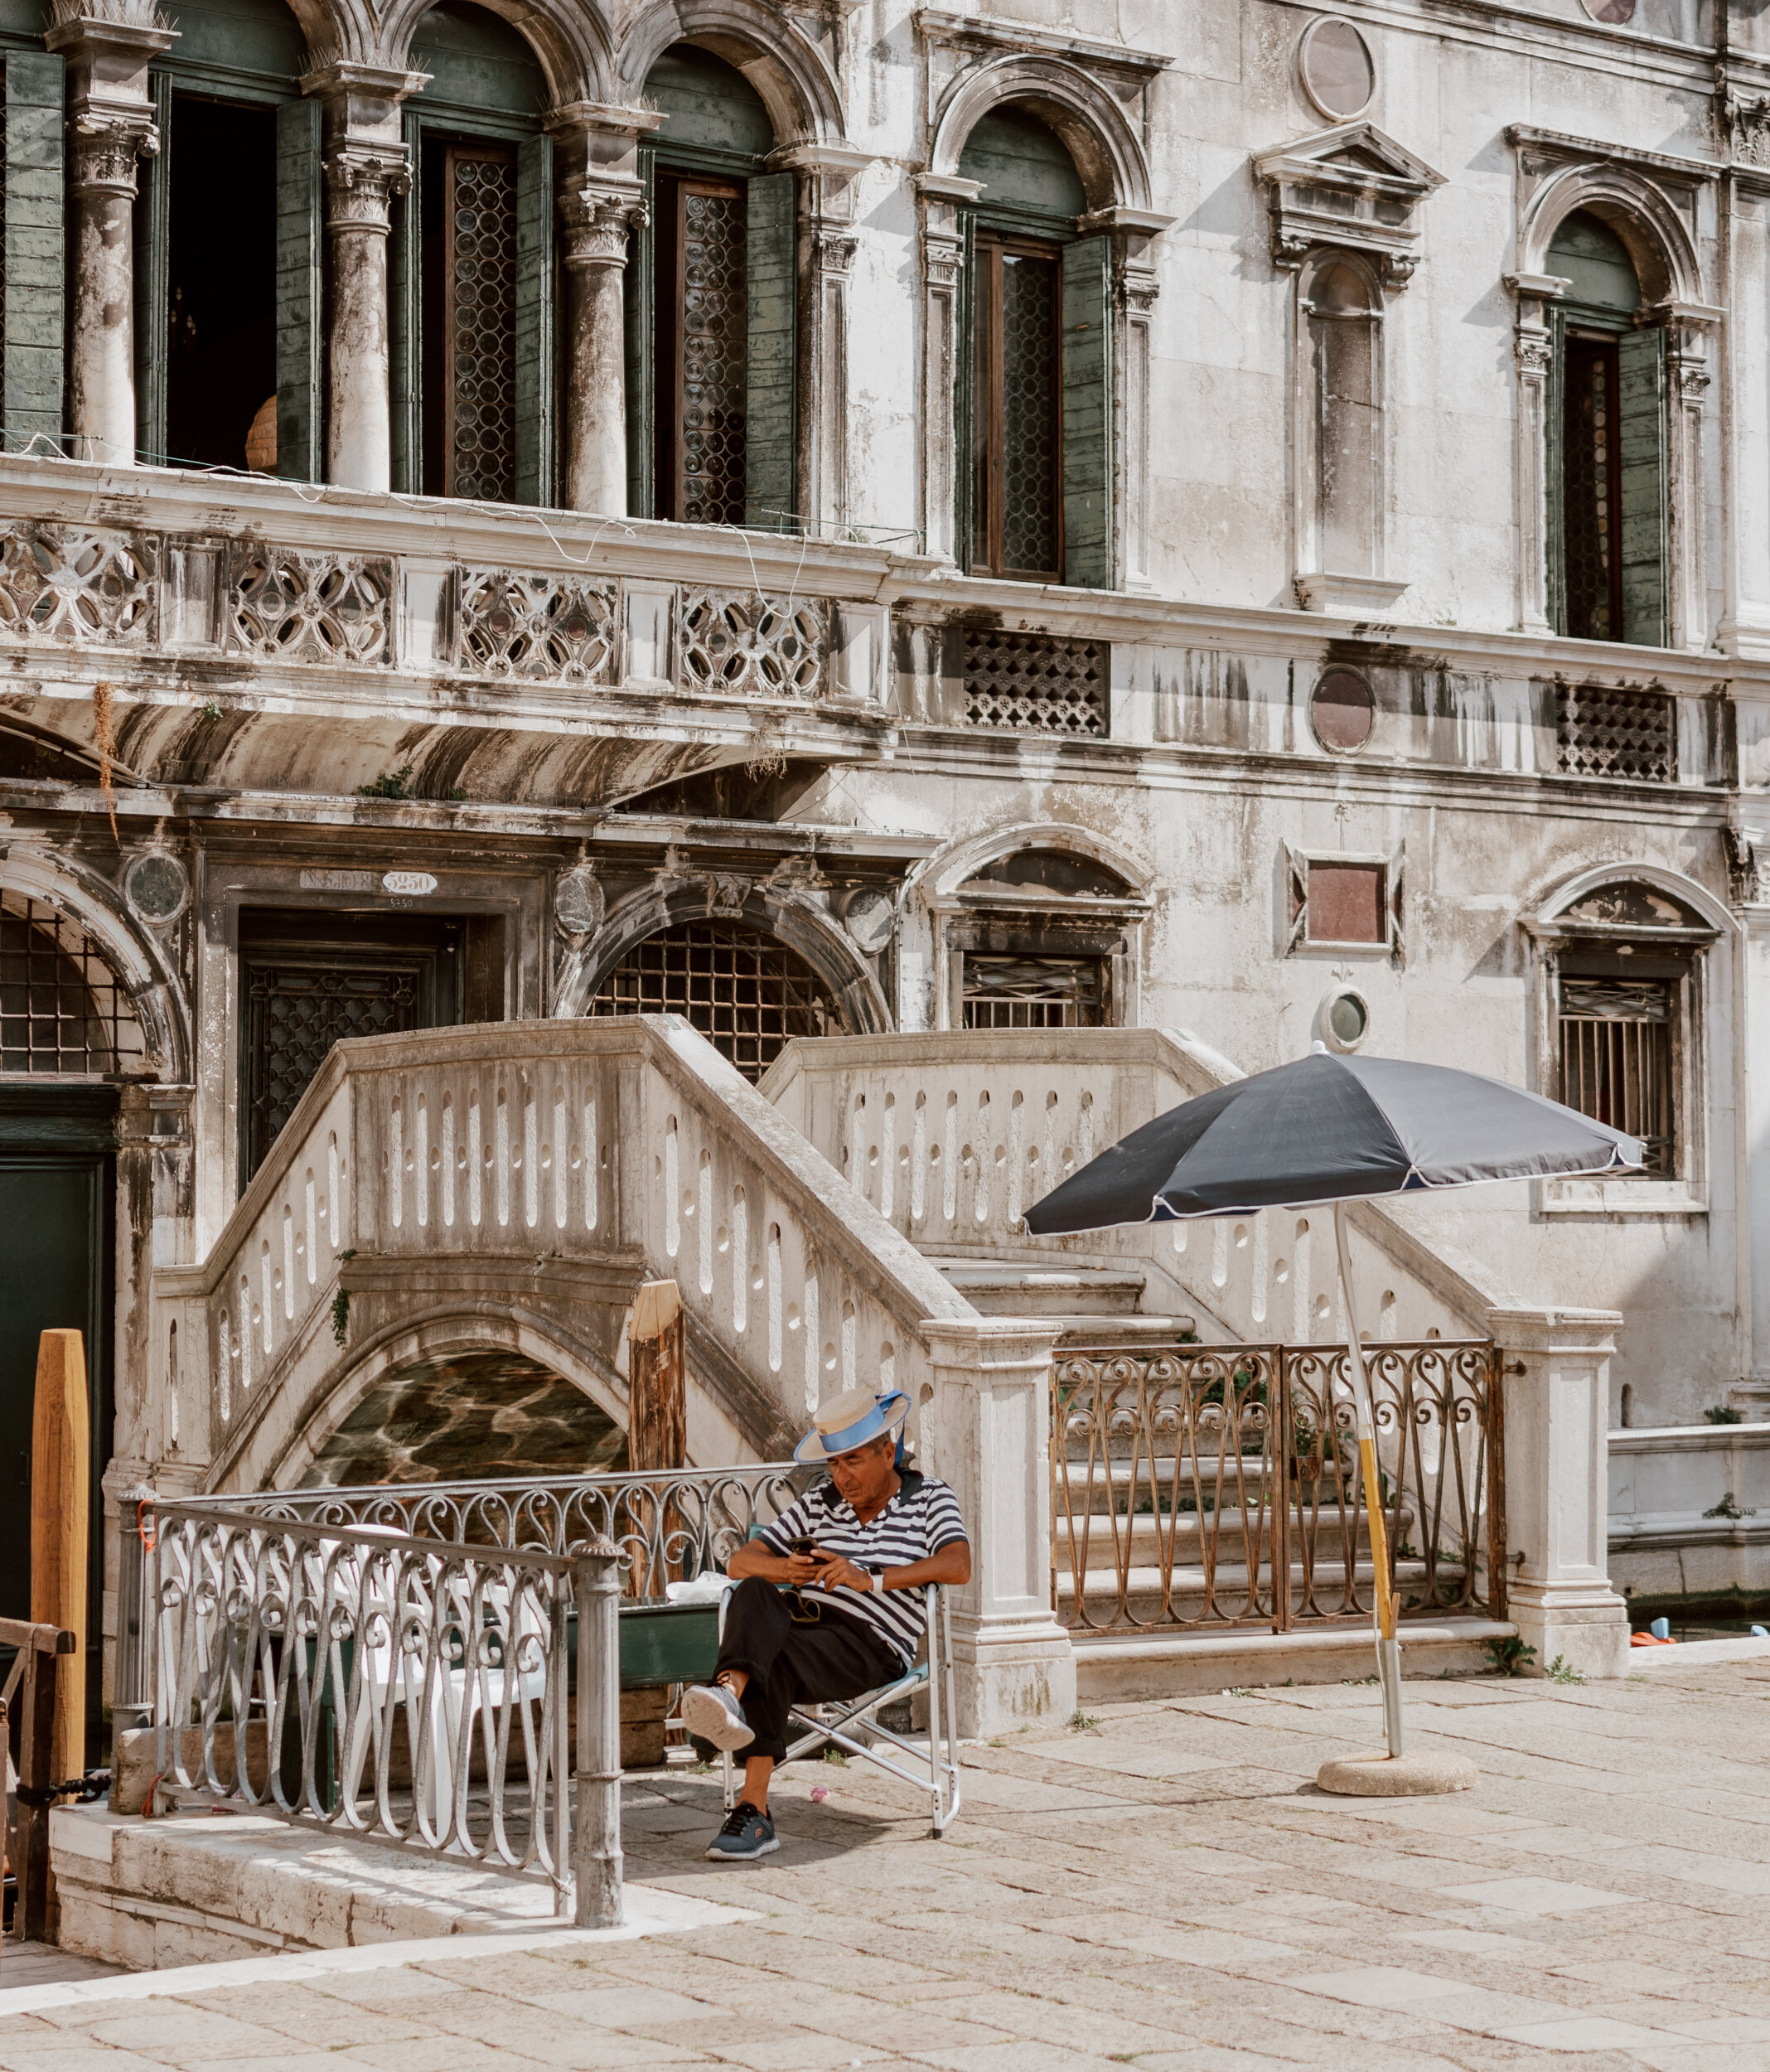 A gondolier in Venice